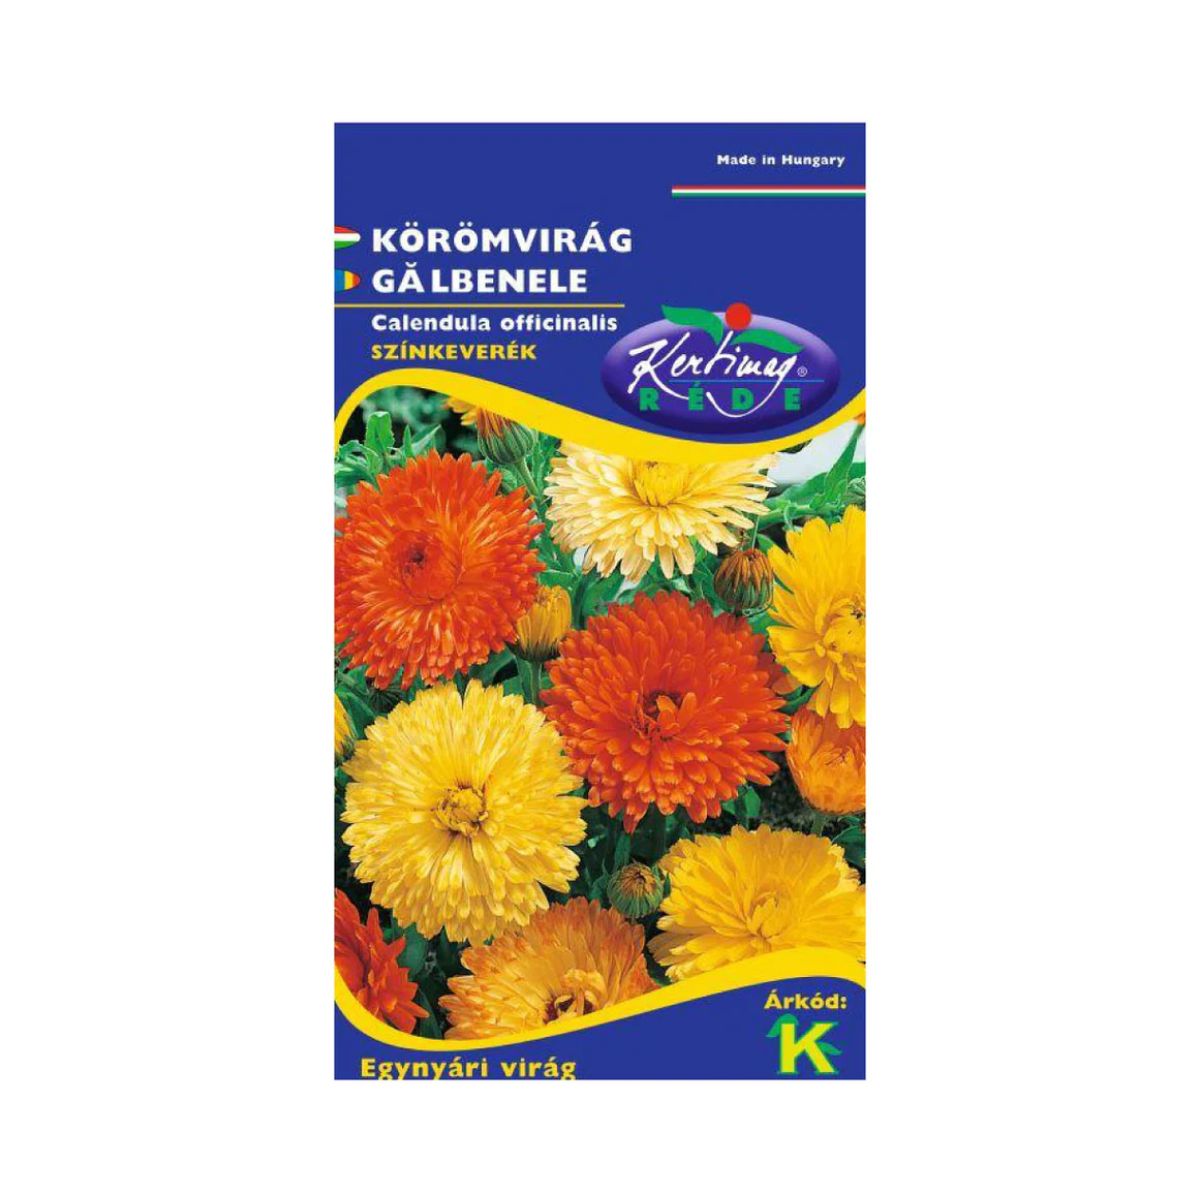 Seminte flori - Seminte de galbenele MIX, 1 gr, KERTIMAG, hectarul.ro